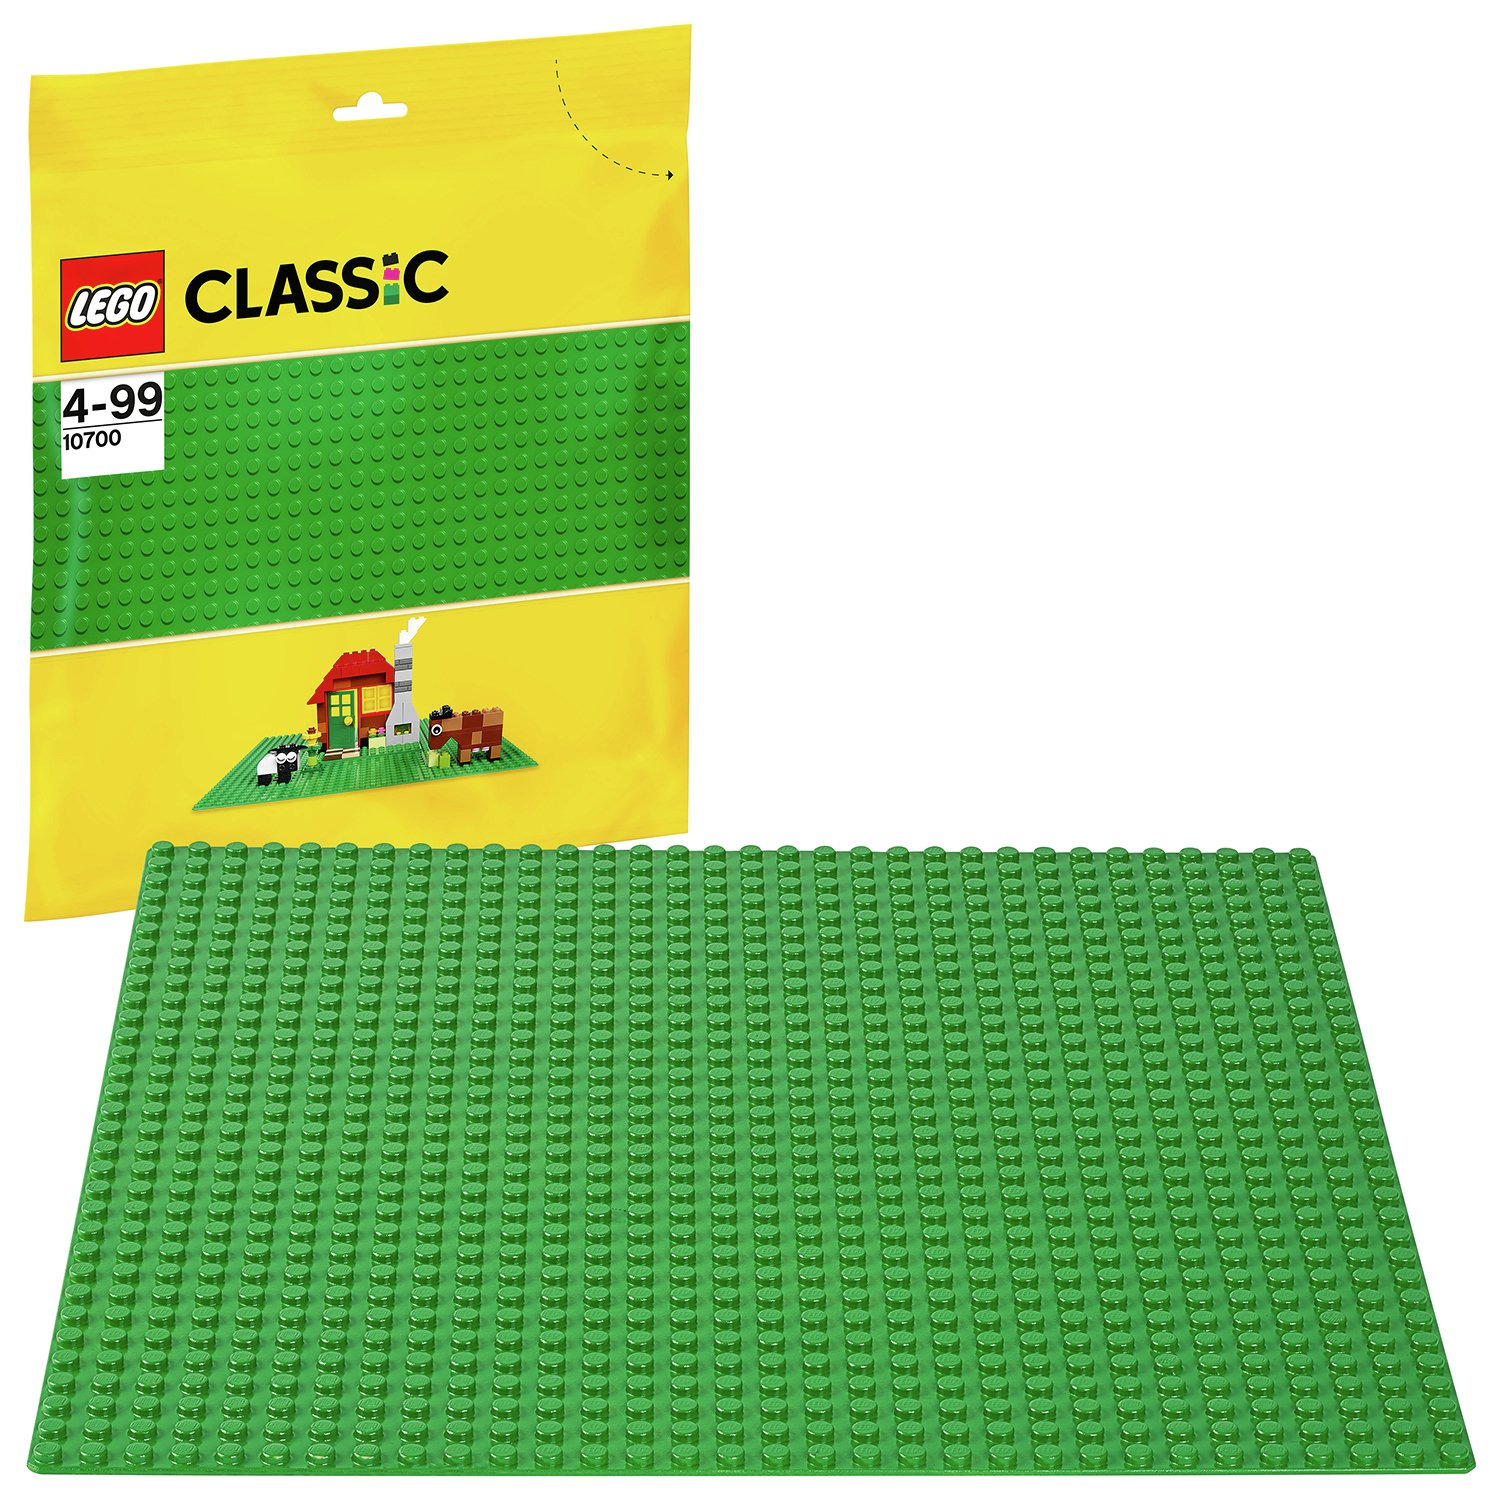 Buy LEGO Classic Base Plate - 10700 